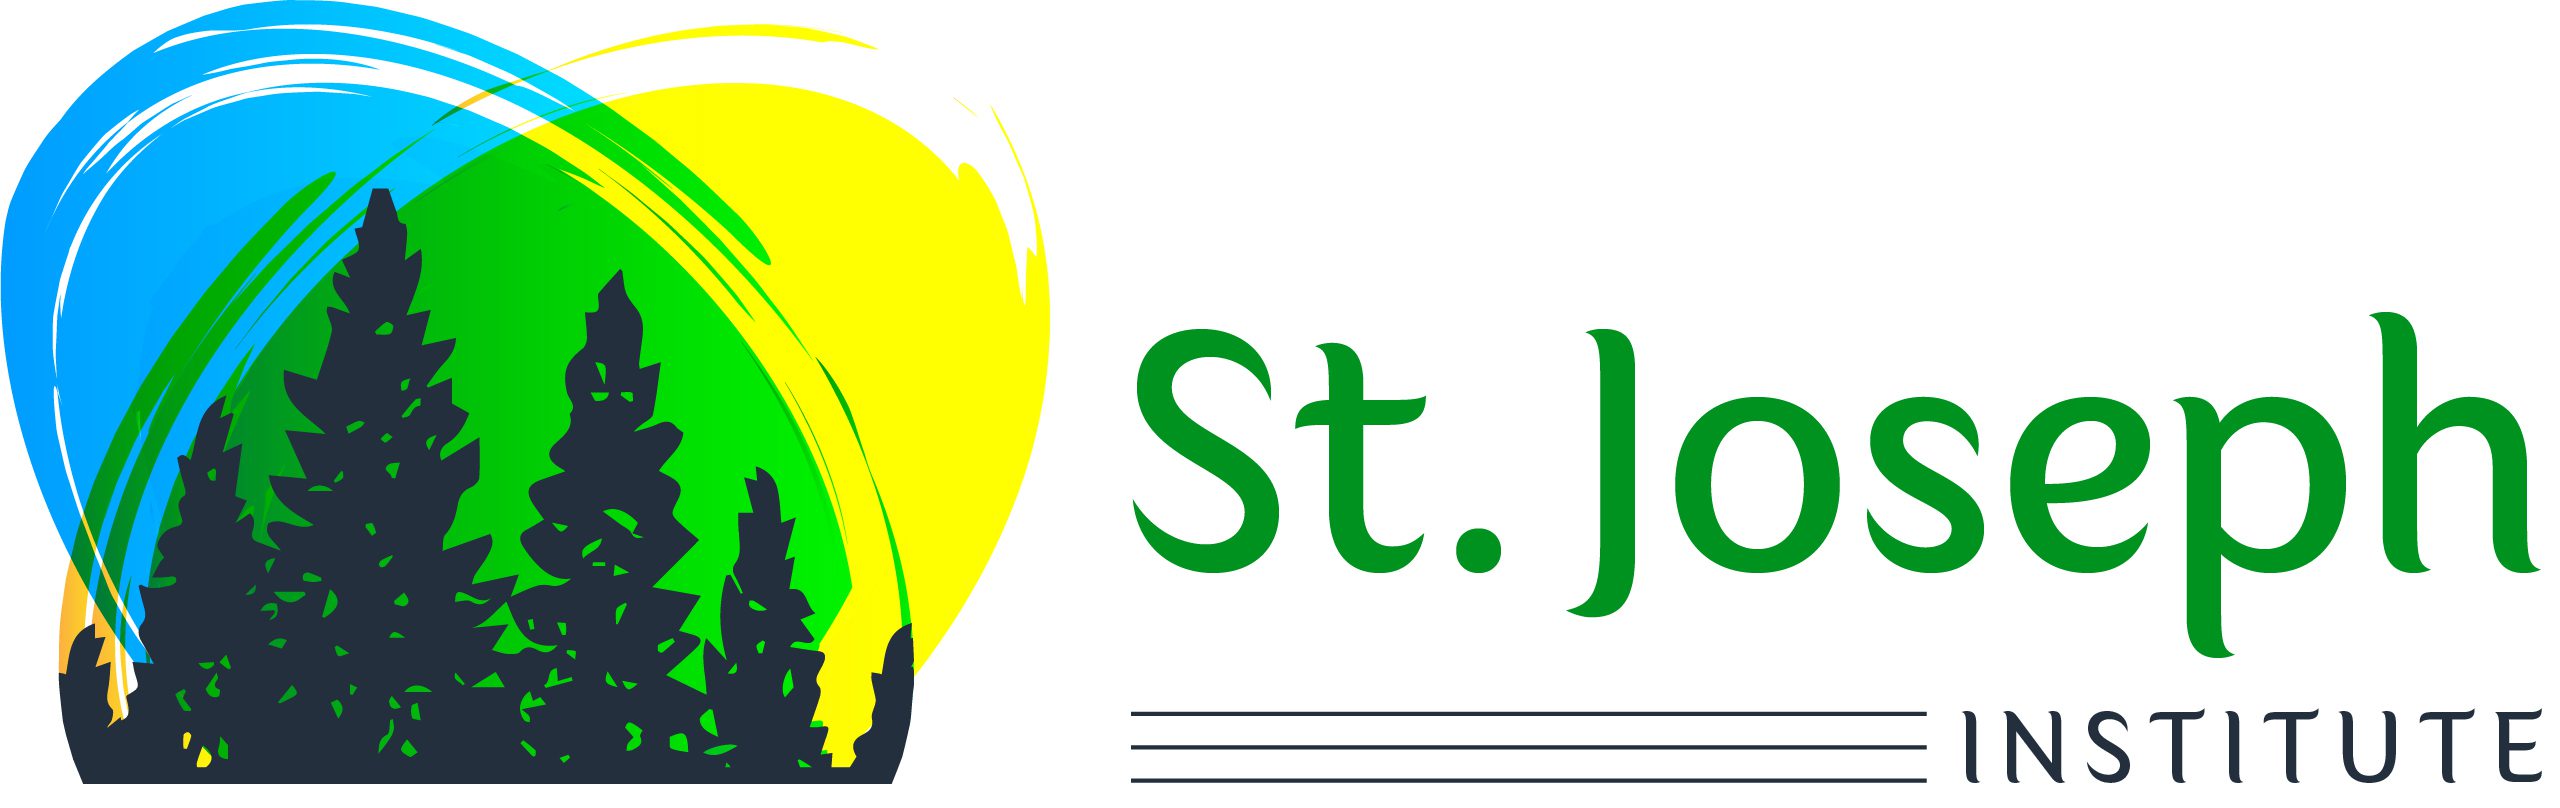 St. Joseph Institue for Addiction - PA alcohol rehab enter